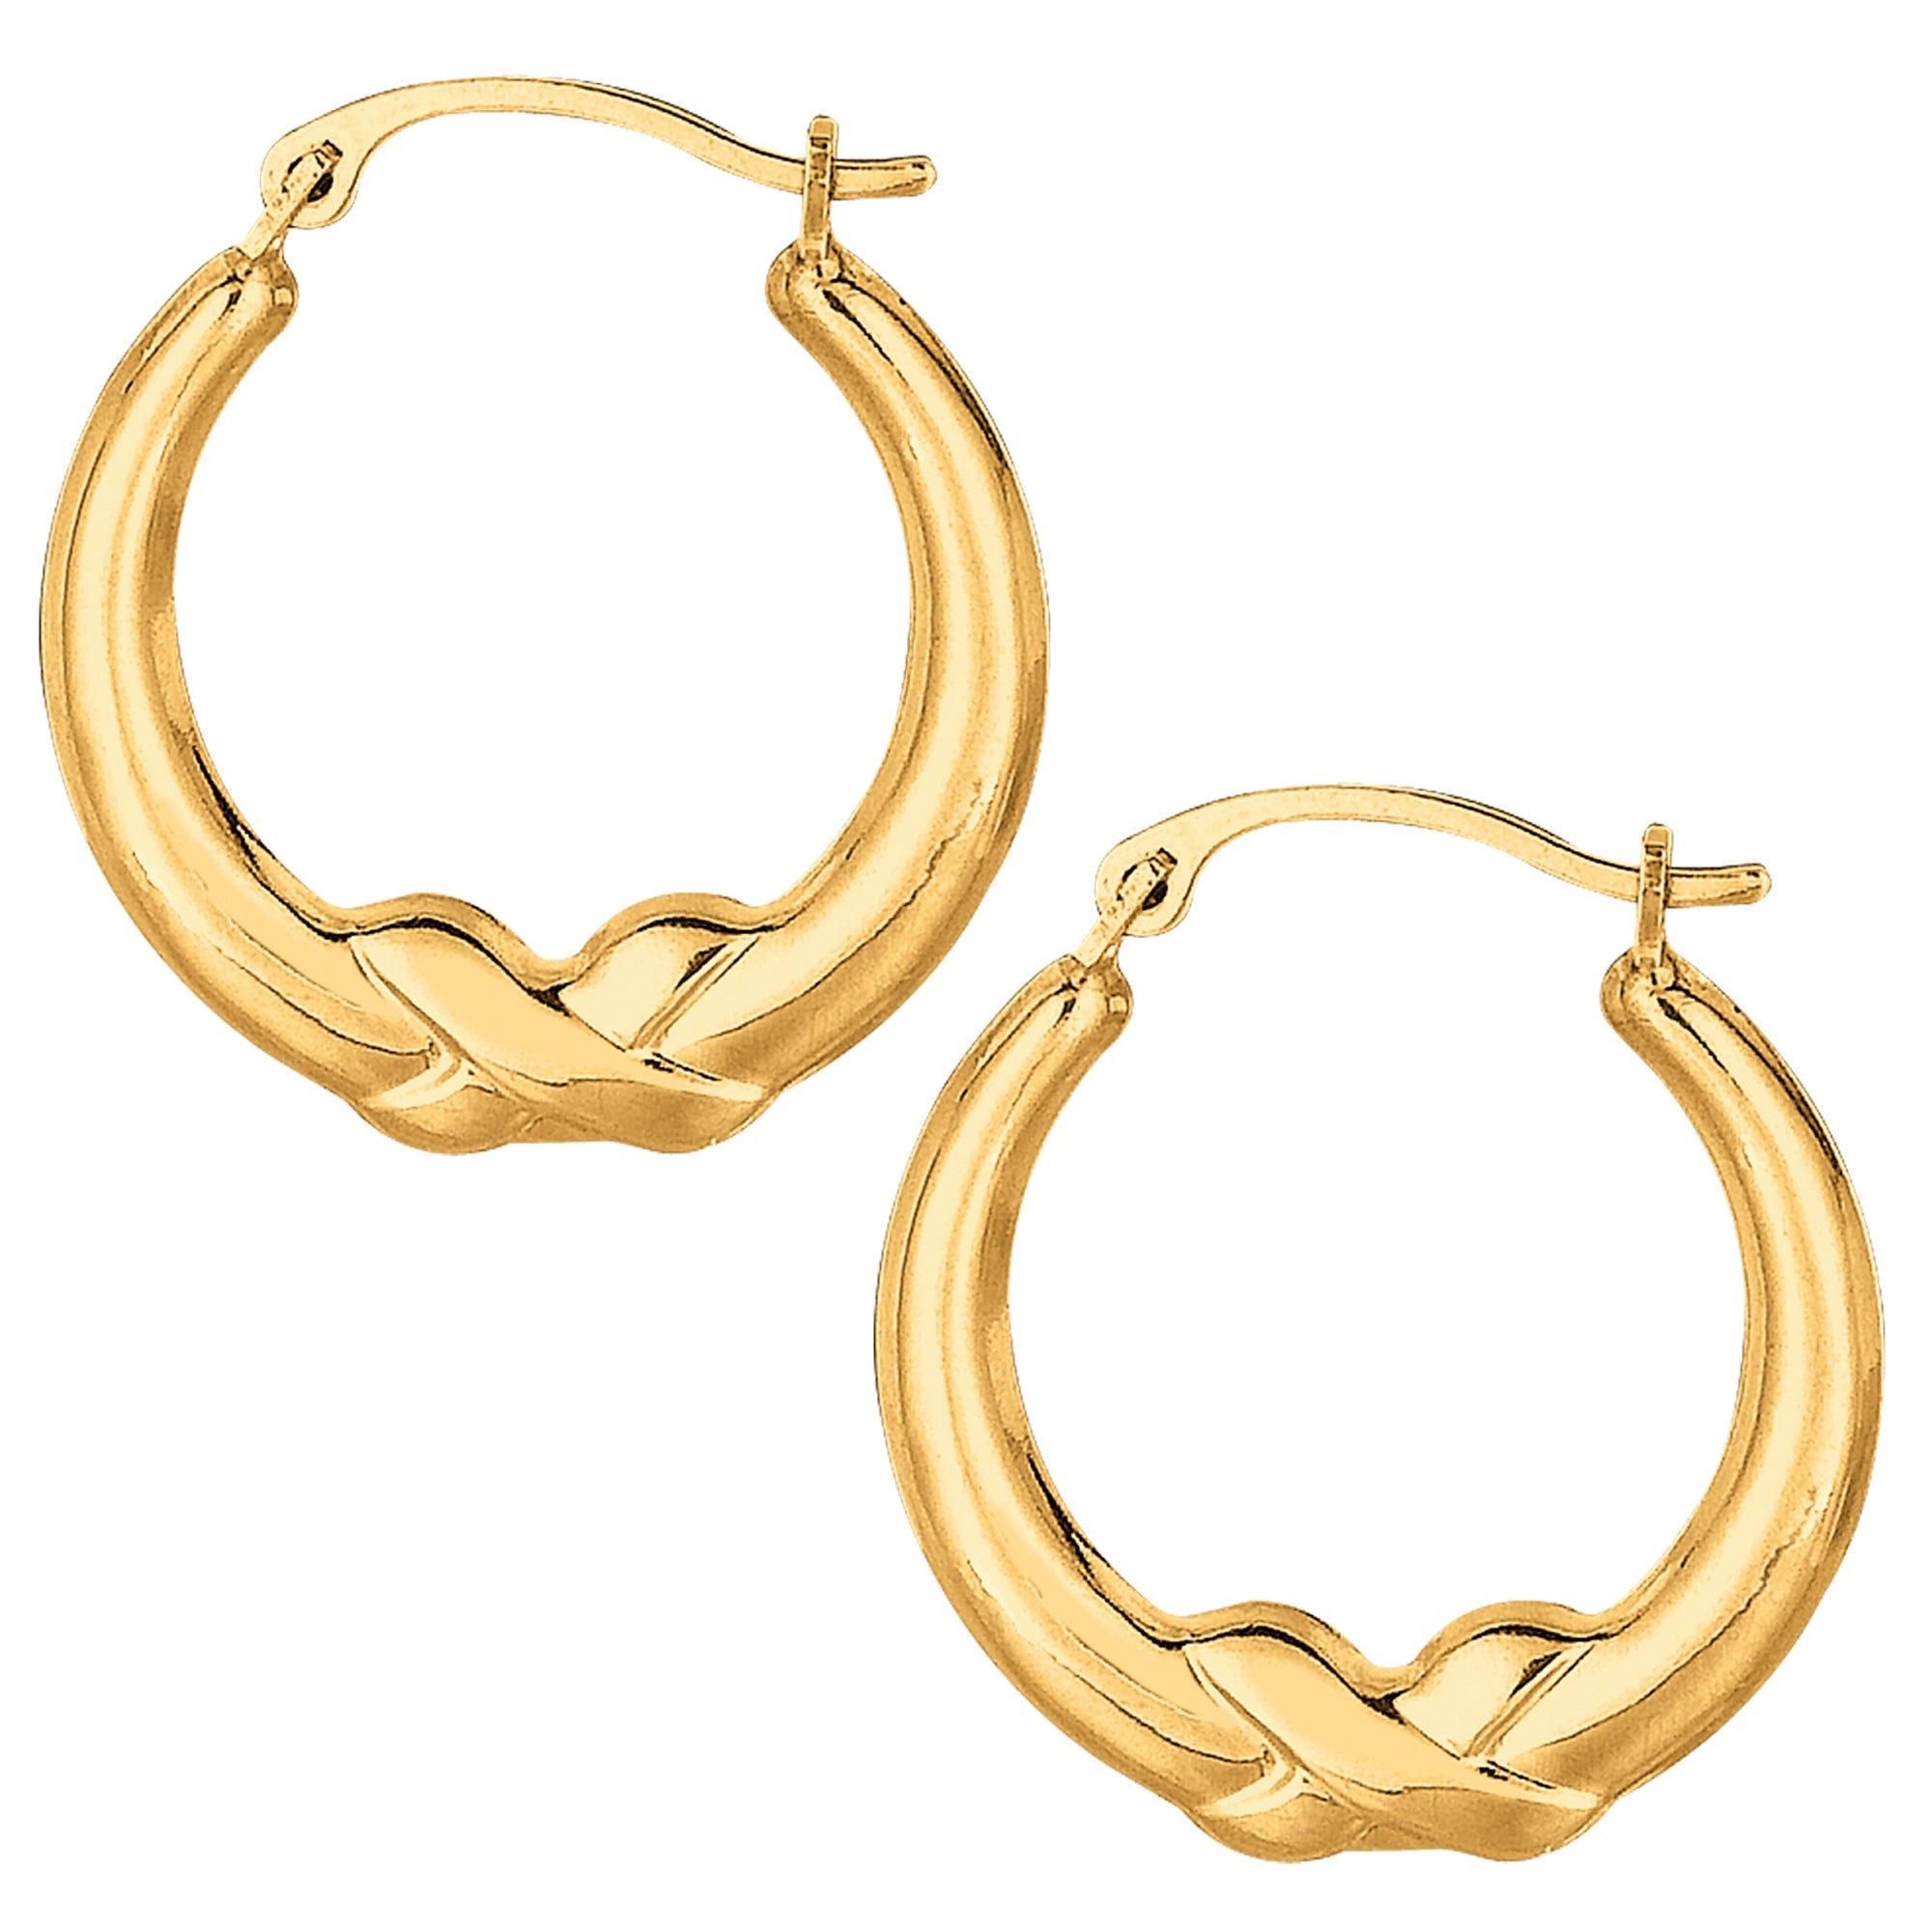 10k Yellow Gold X Design Round Shape Hoop Earrings, Diameter 20mm fine designer jewelry for men and women